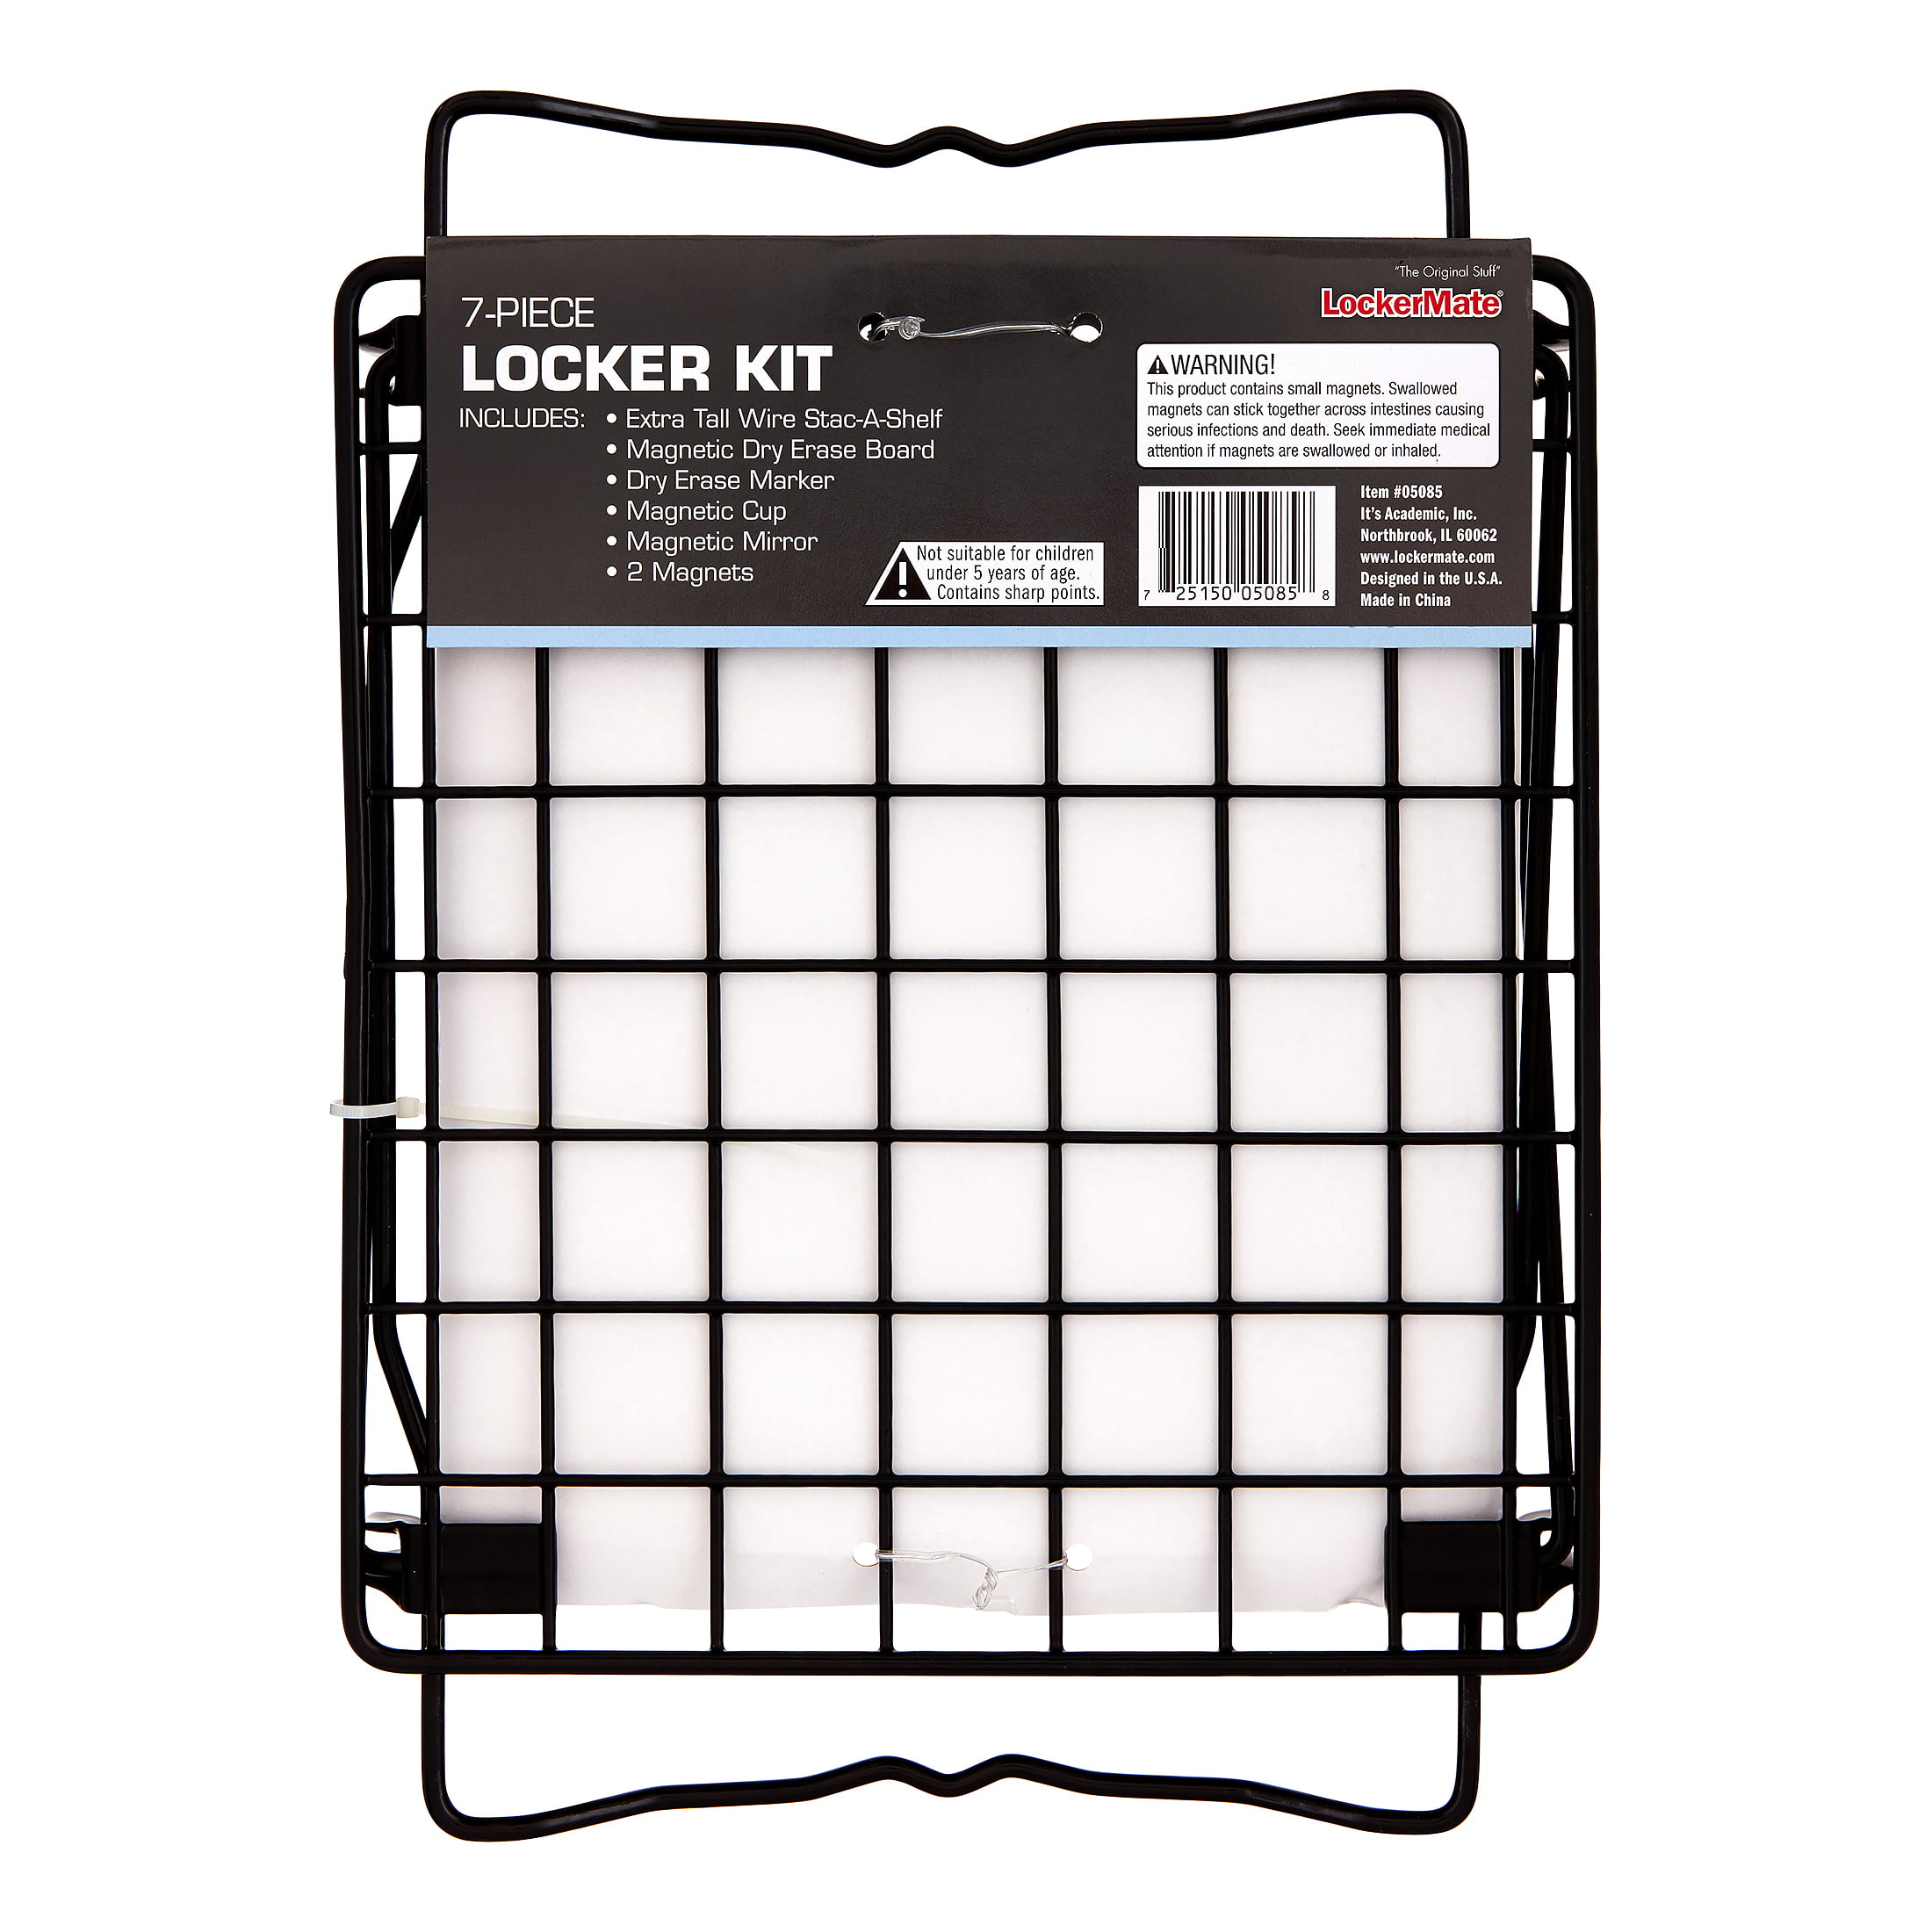 Lockermate 7 pc Locker Kit Magnetic Mirror Shelf Dry Erase Board Magnets NEW 